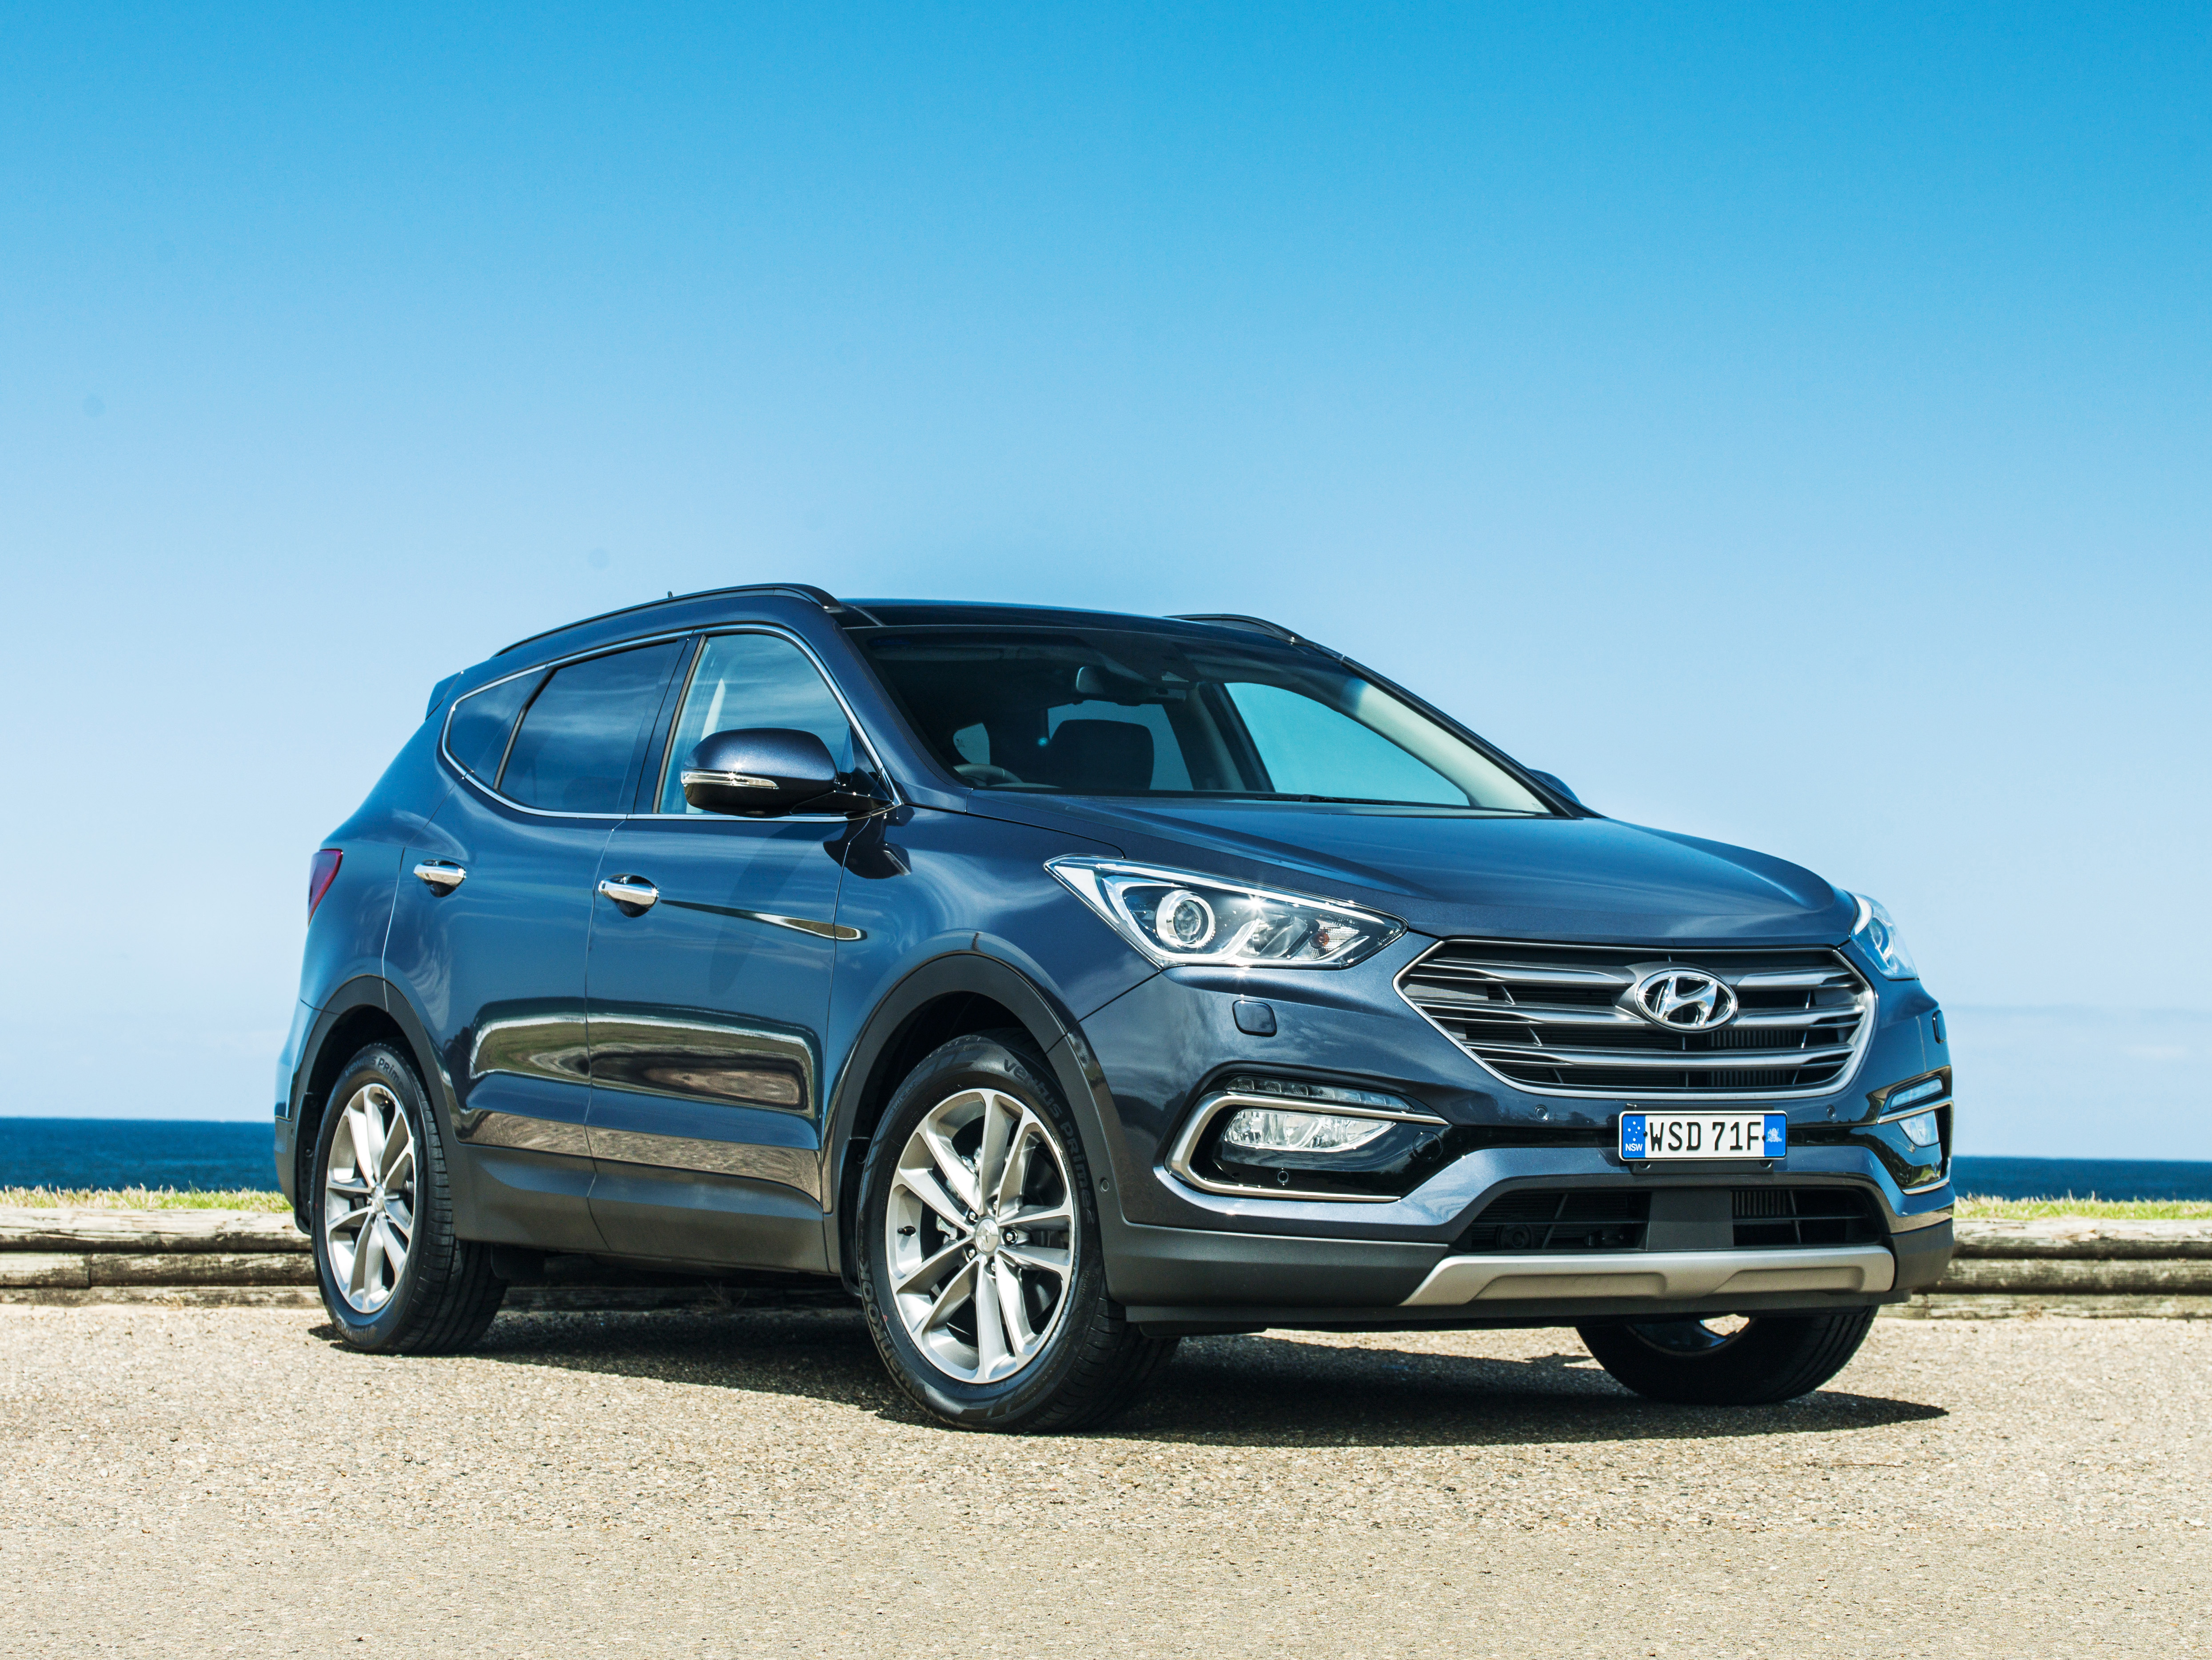 2016 Hyundai Santa Fe Review - photos | CarAdvice